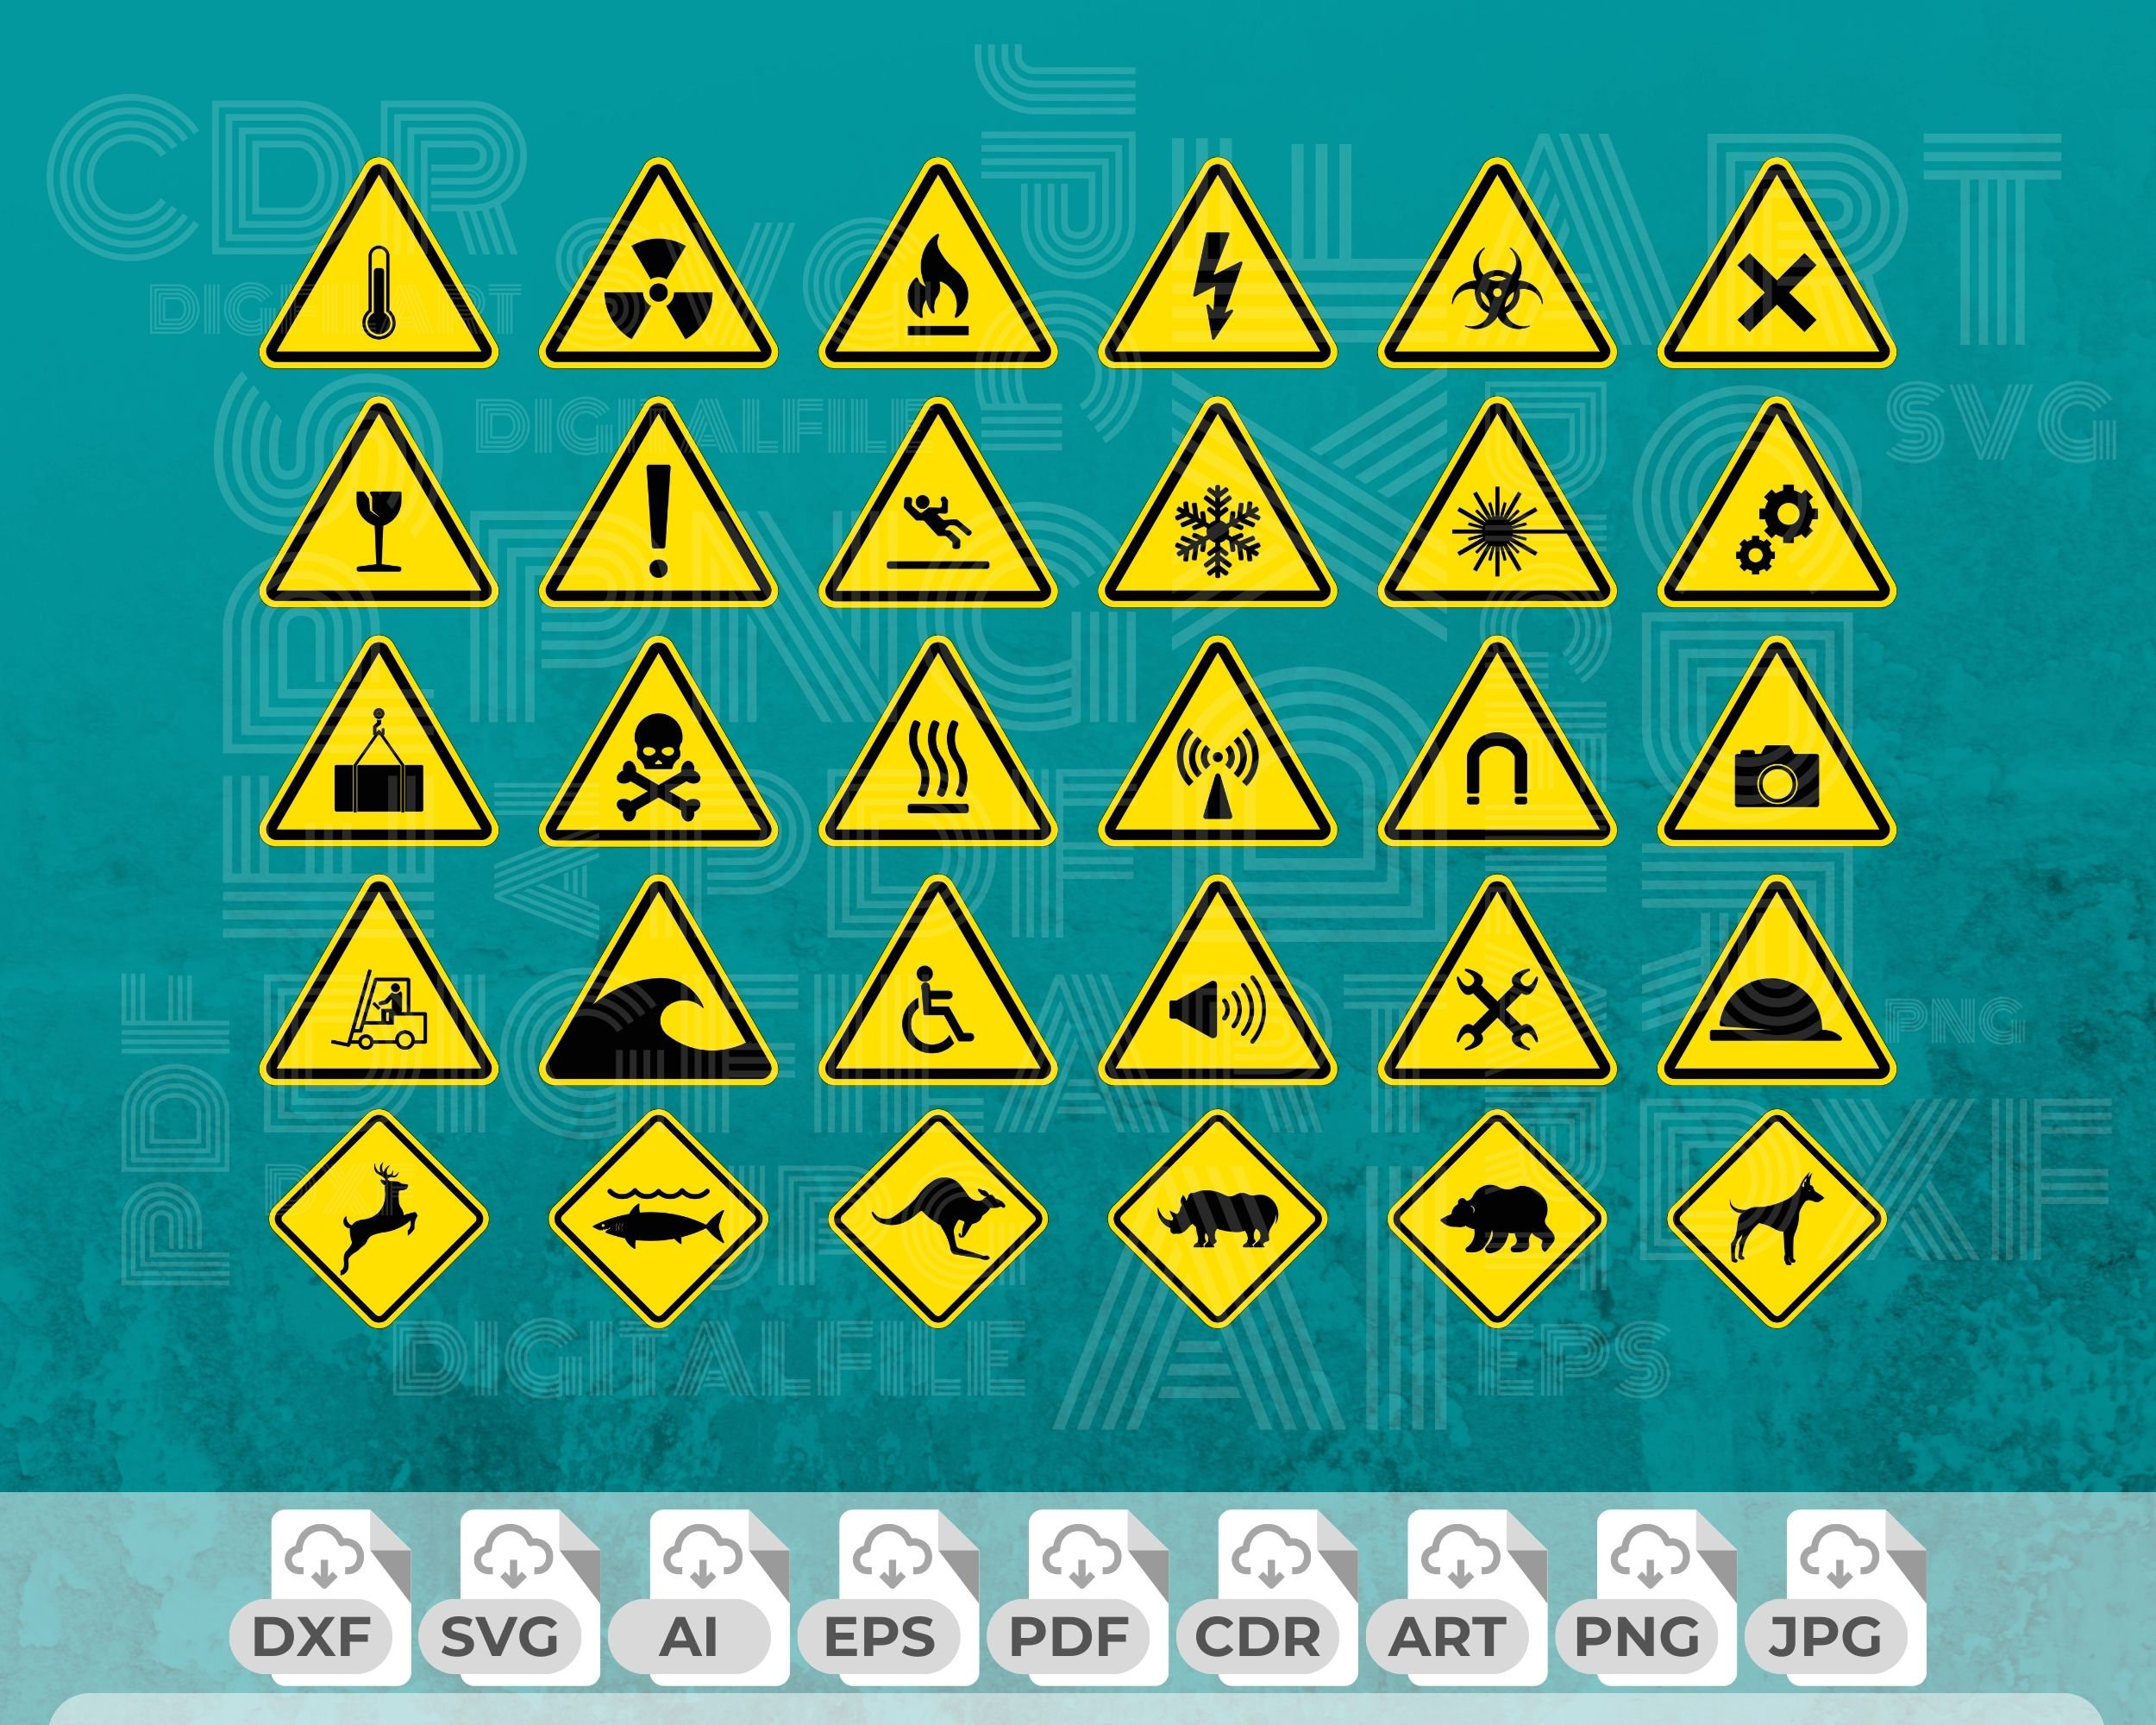 Warning Road Sign Animal Crossing Diamondshaped Stock Vector